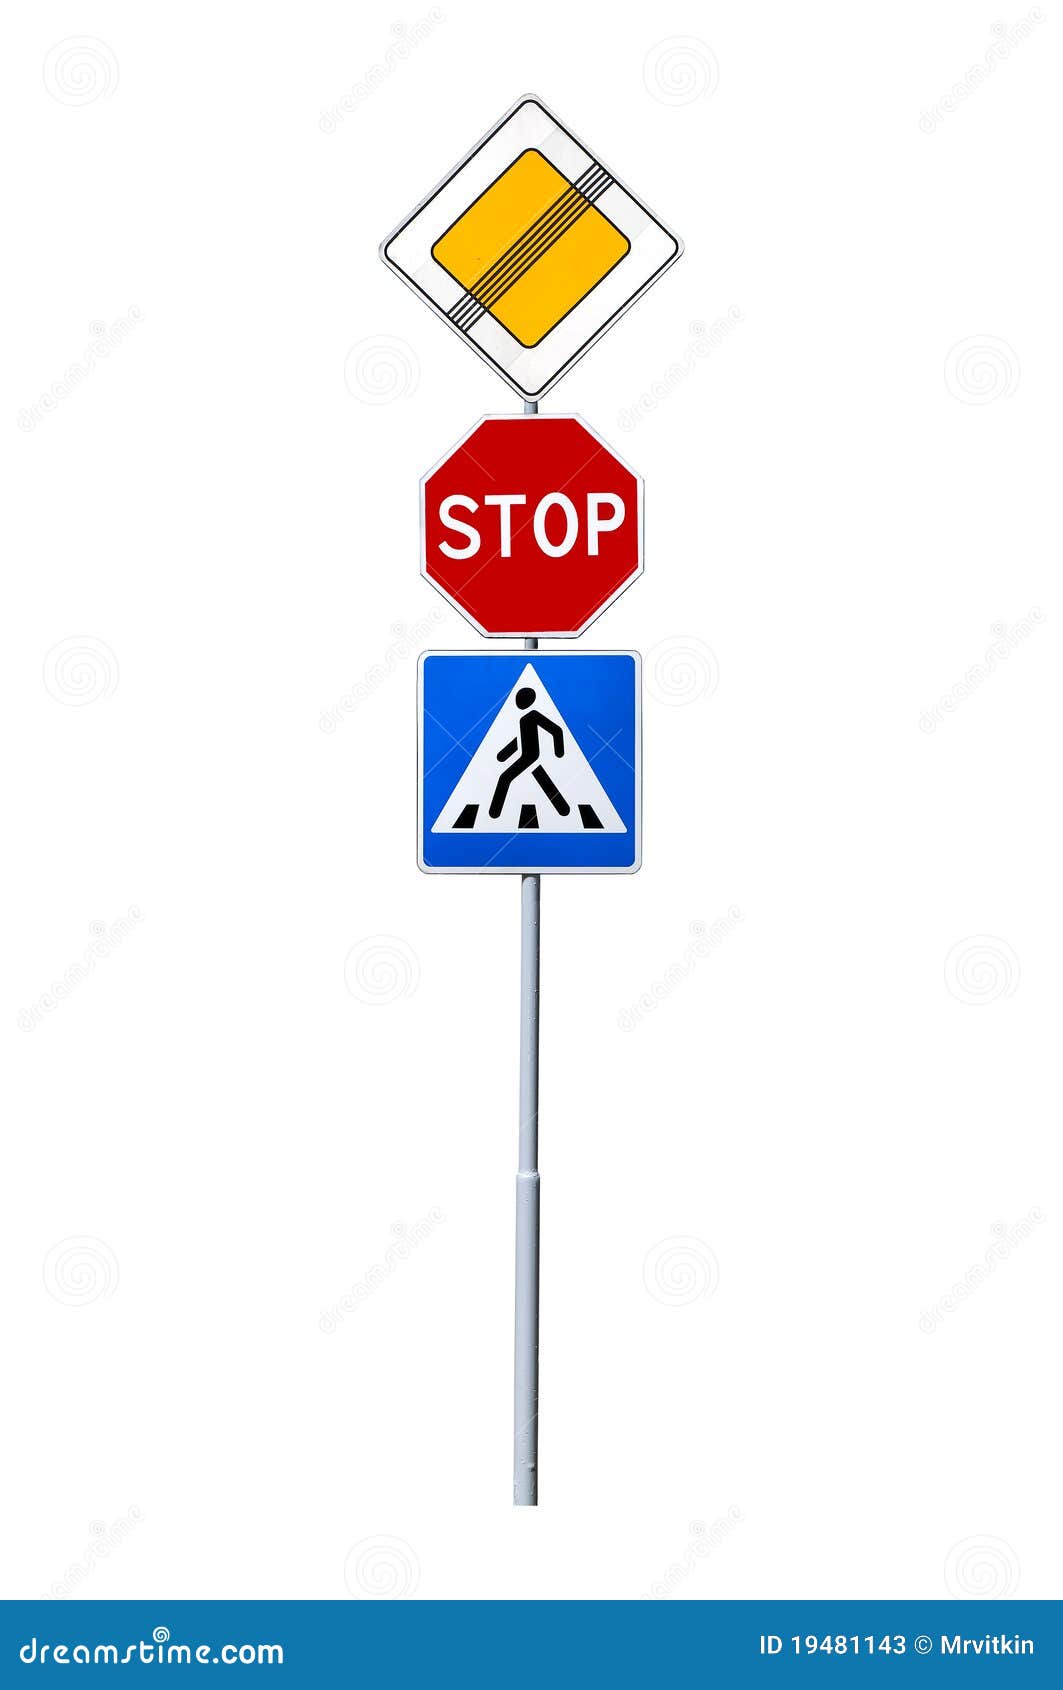 stop, crosswalk,thoroughfare traffic signs